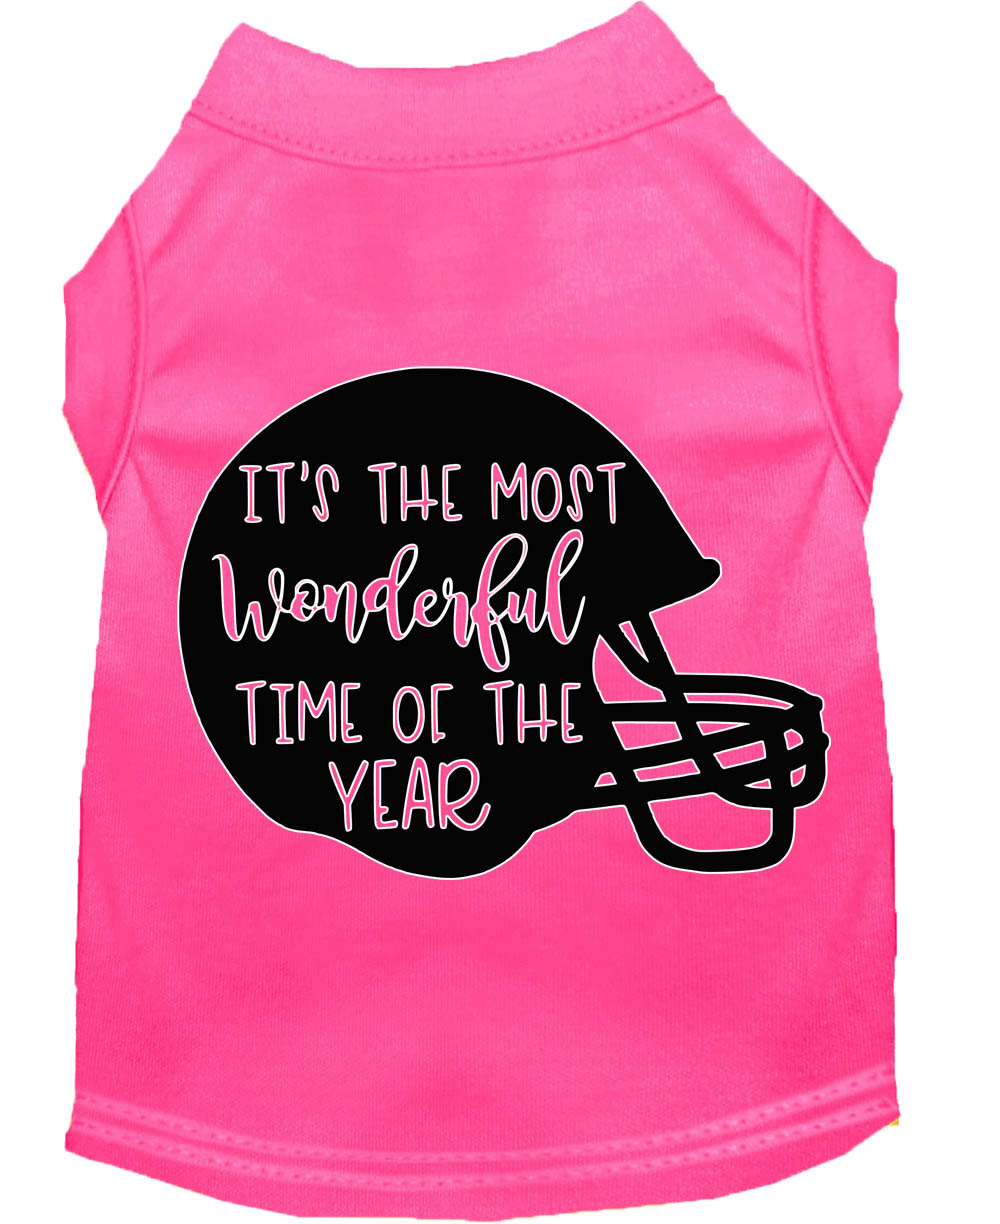 Most Wonderful Time of the Year (Football) Screen Print Dog Shirt Bright Pink XXXL